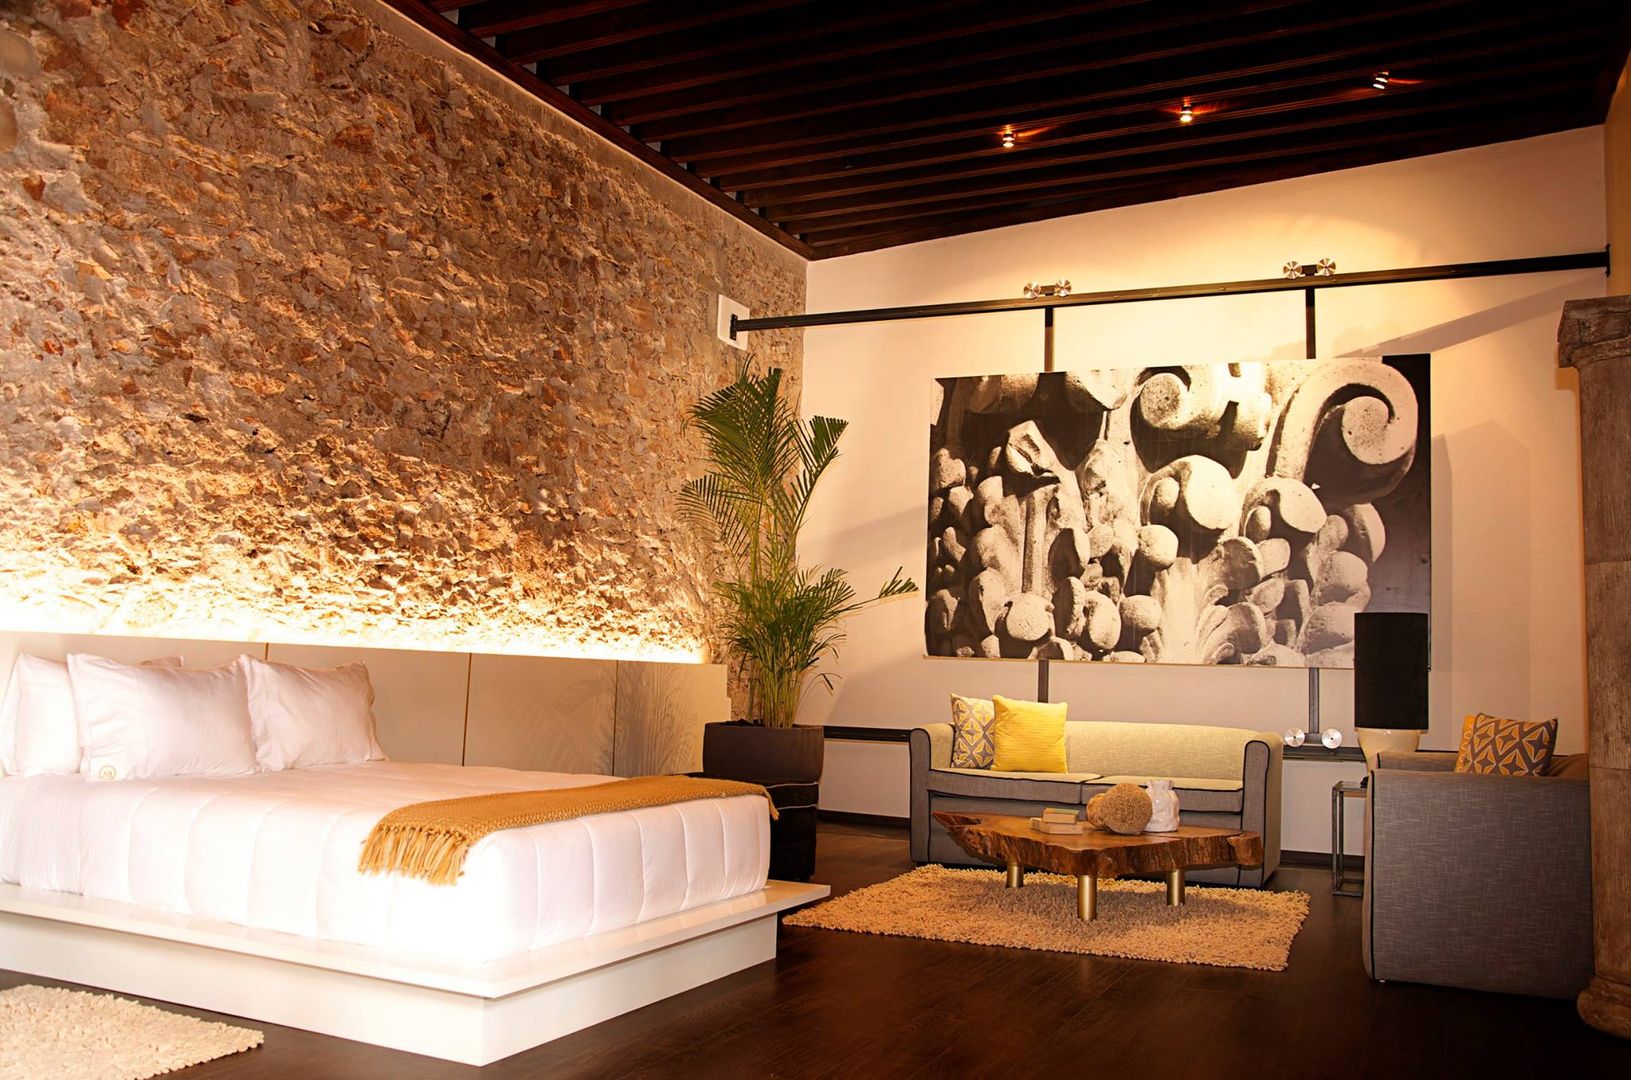 MESÓN DE SANTA ROSA LUXURY HOTEL, MADRE VETA MADRE VETA Modern style bedroom Wood Wood effect